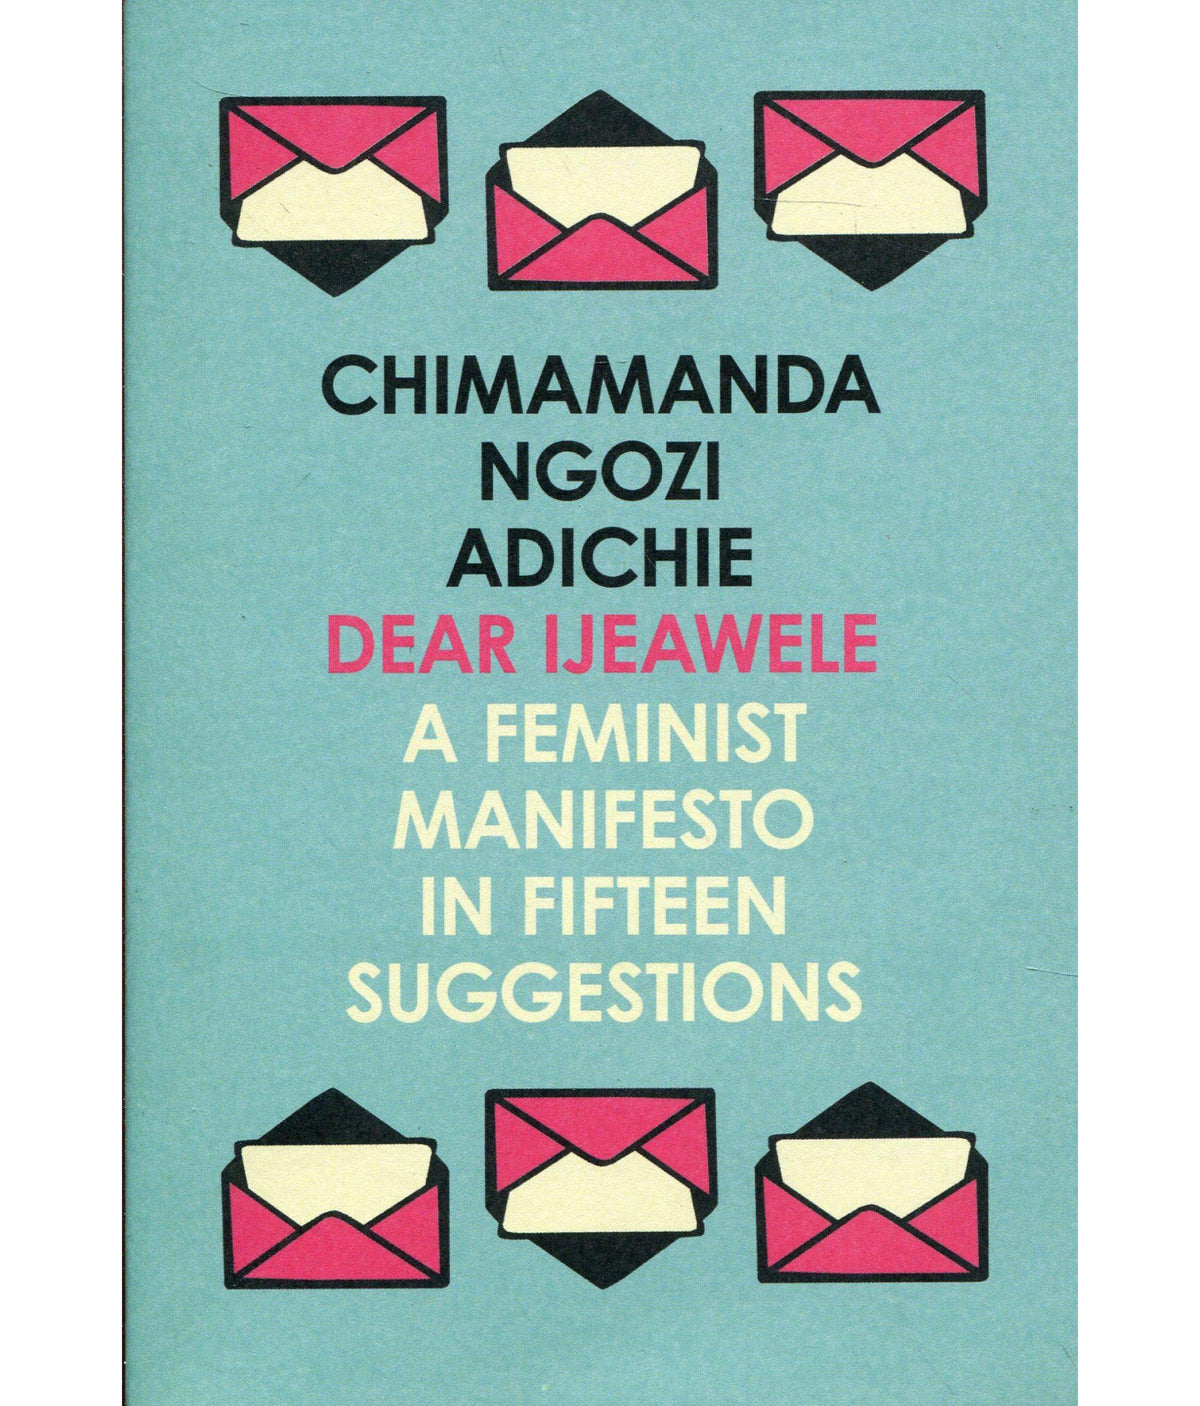 adichie feminist manifesto